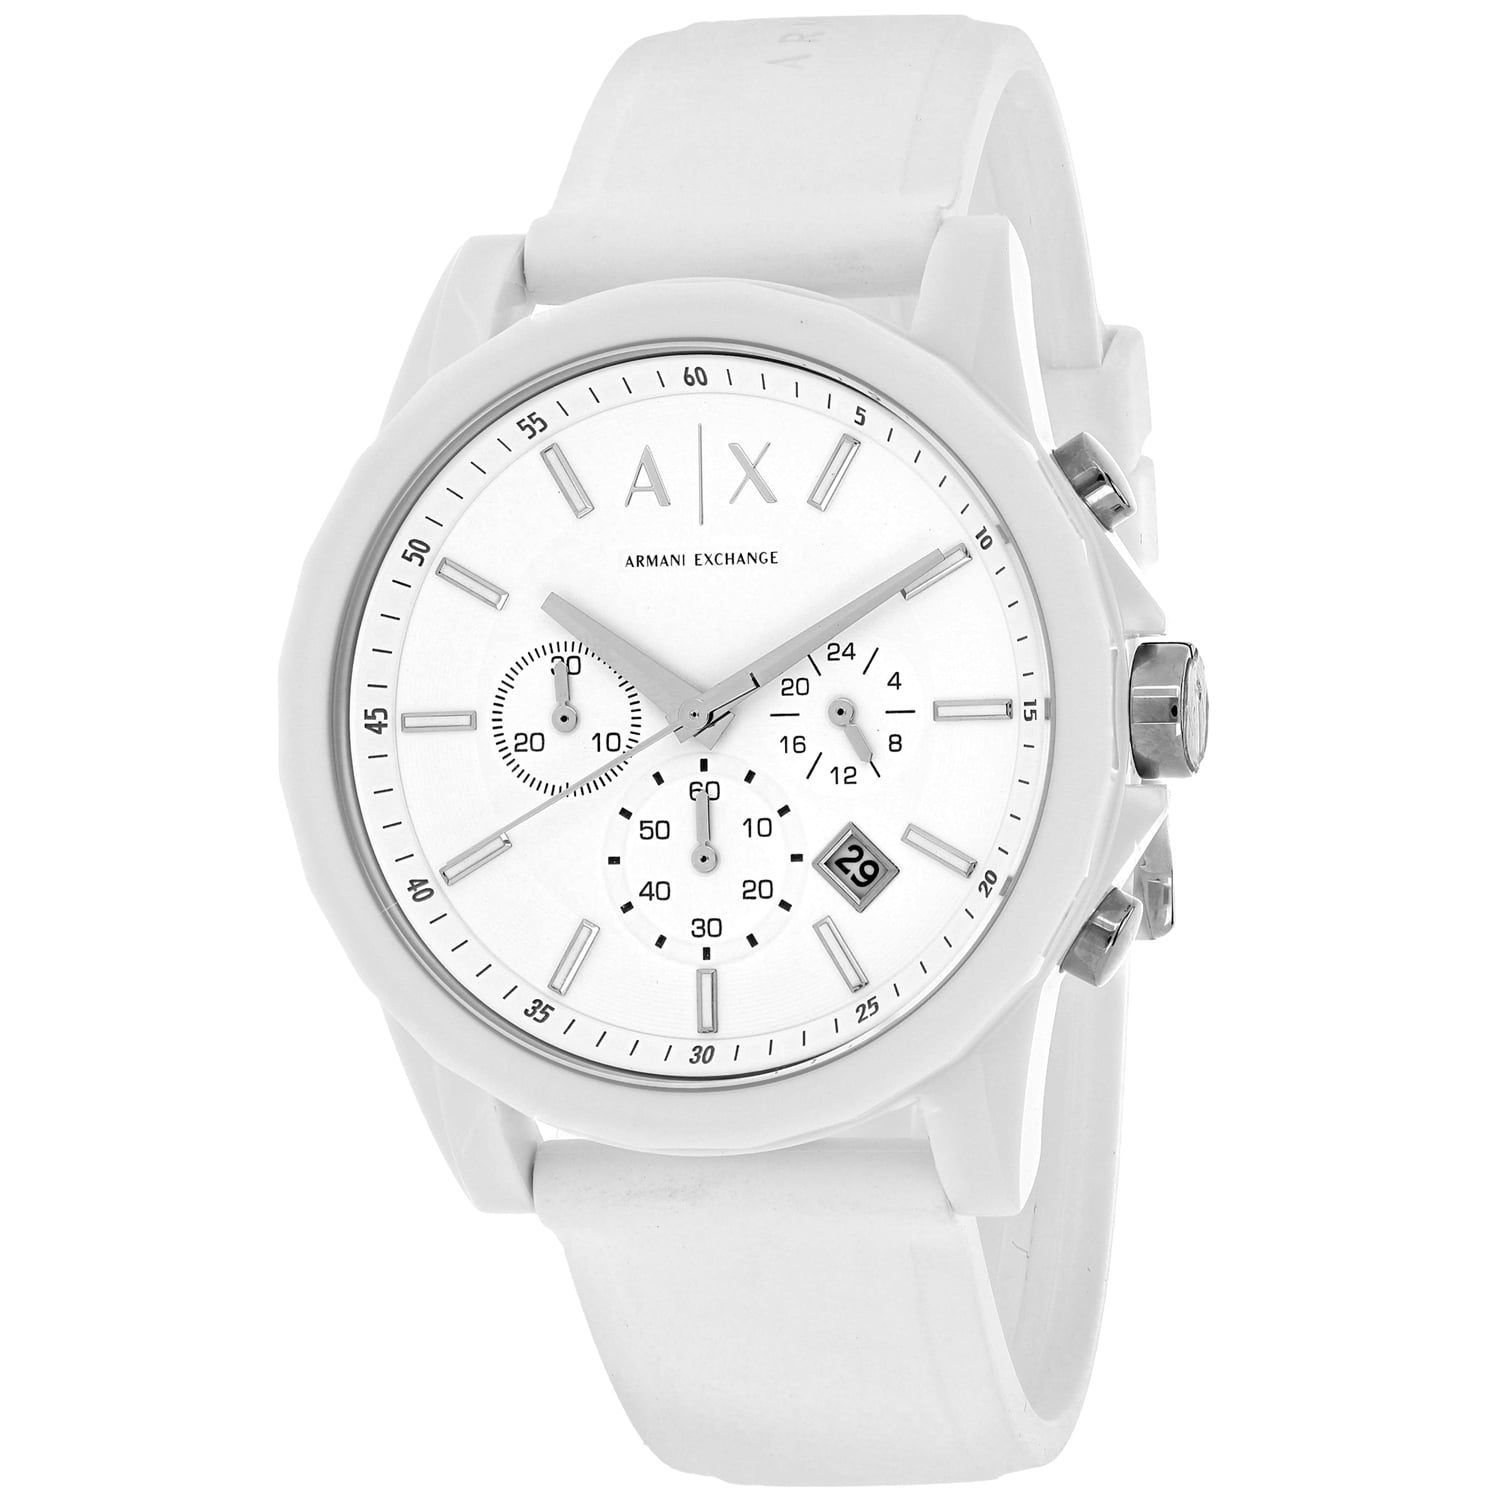 AX1325 White Resin Quartz Dress Watch 